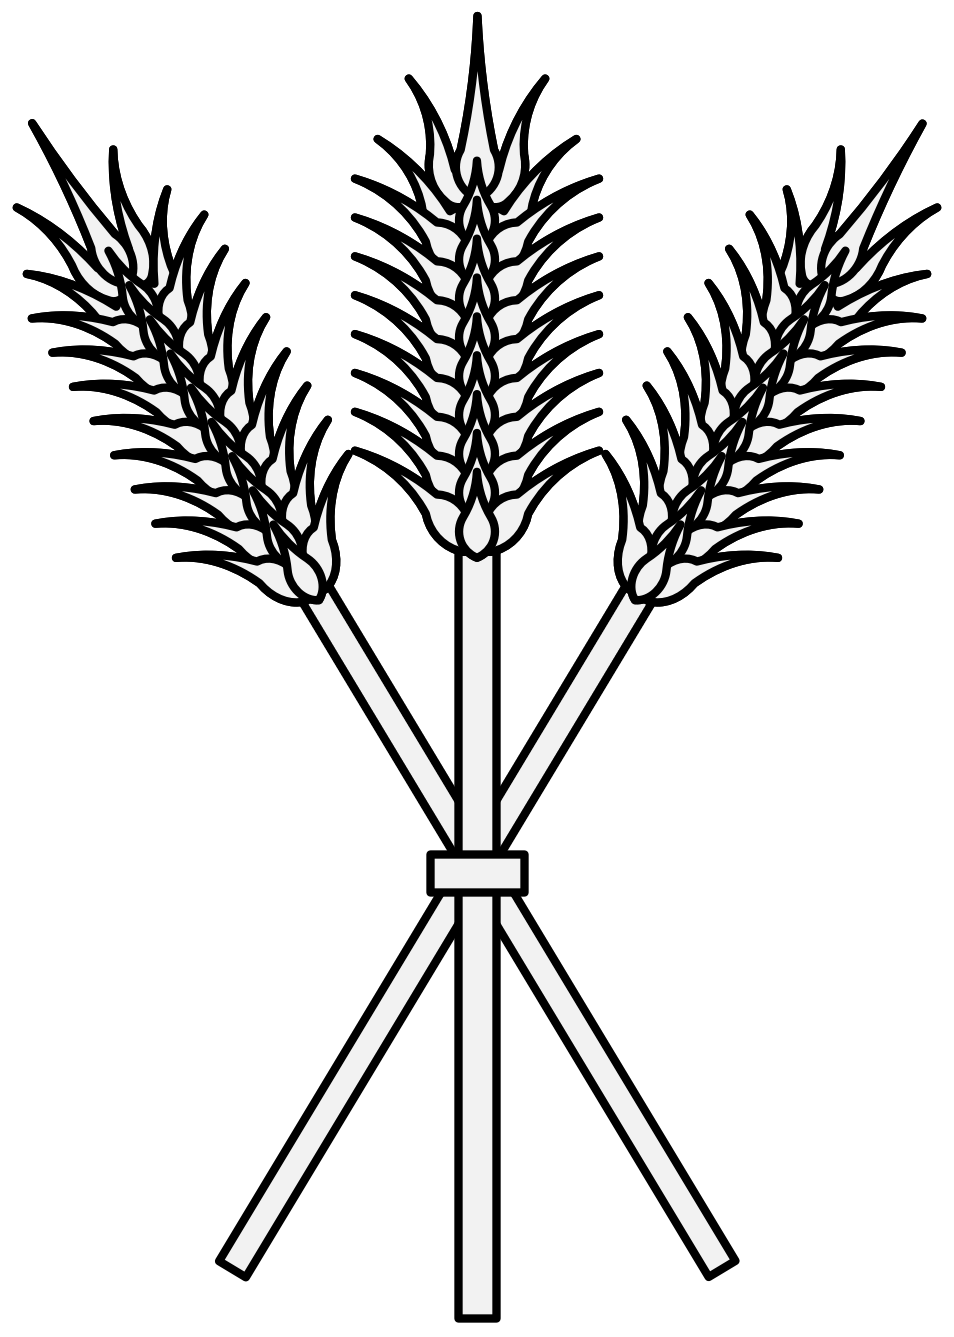 Sheaf traceable art pdf. Wheat clipart heraldic